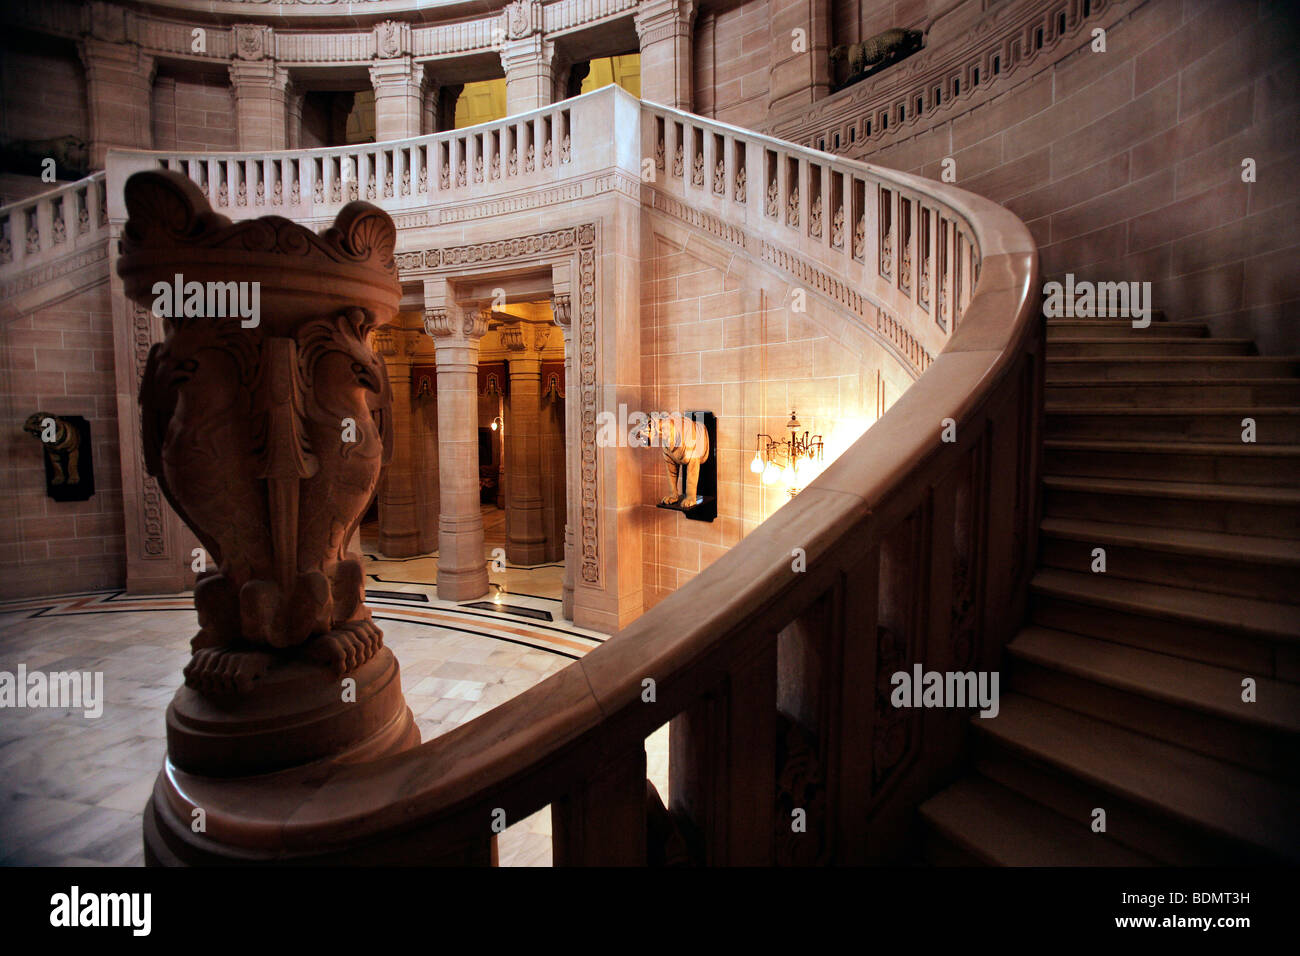 The staircase in the lobby, Umaid Bhavan Palace, Jodhpur, Rajasthan, India, Asia Stock Photo